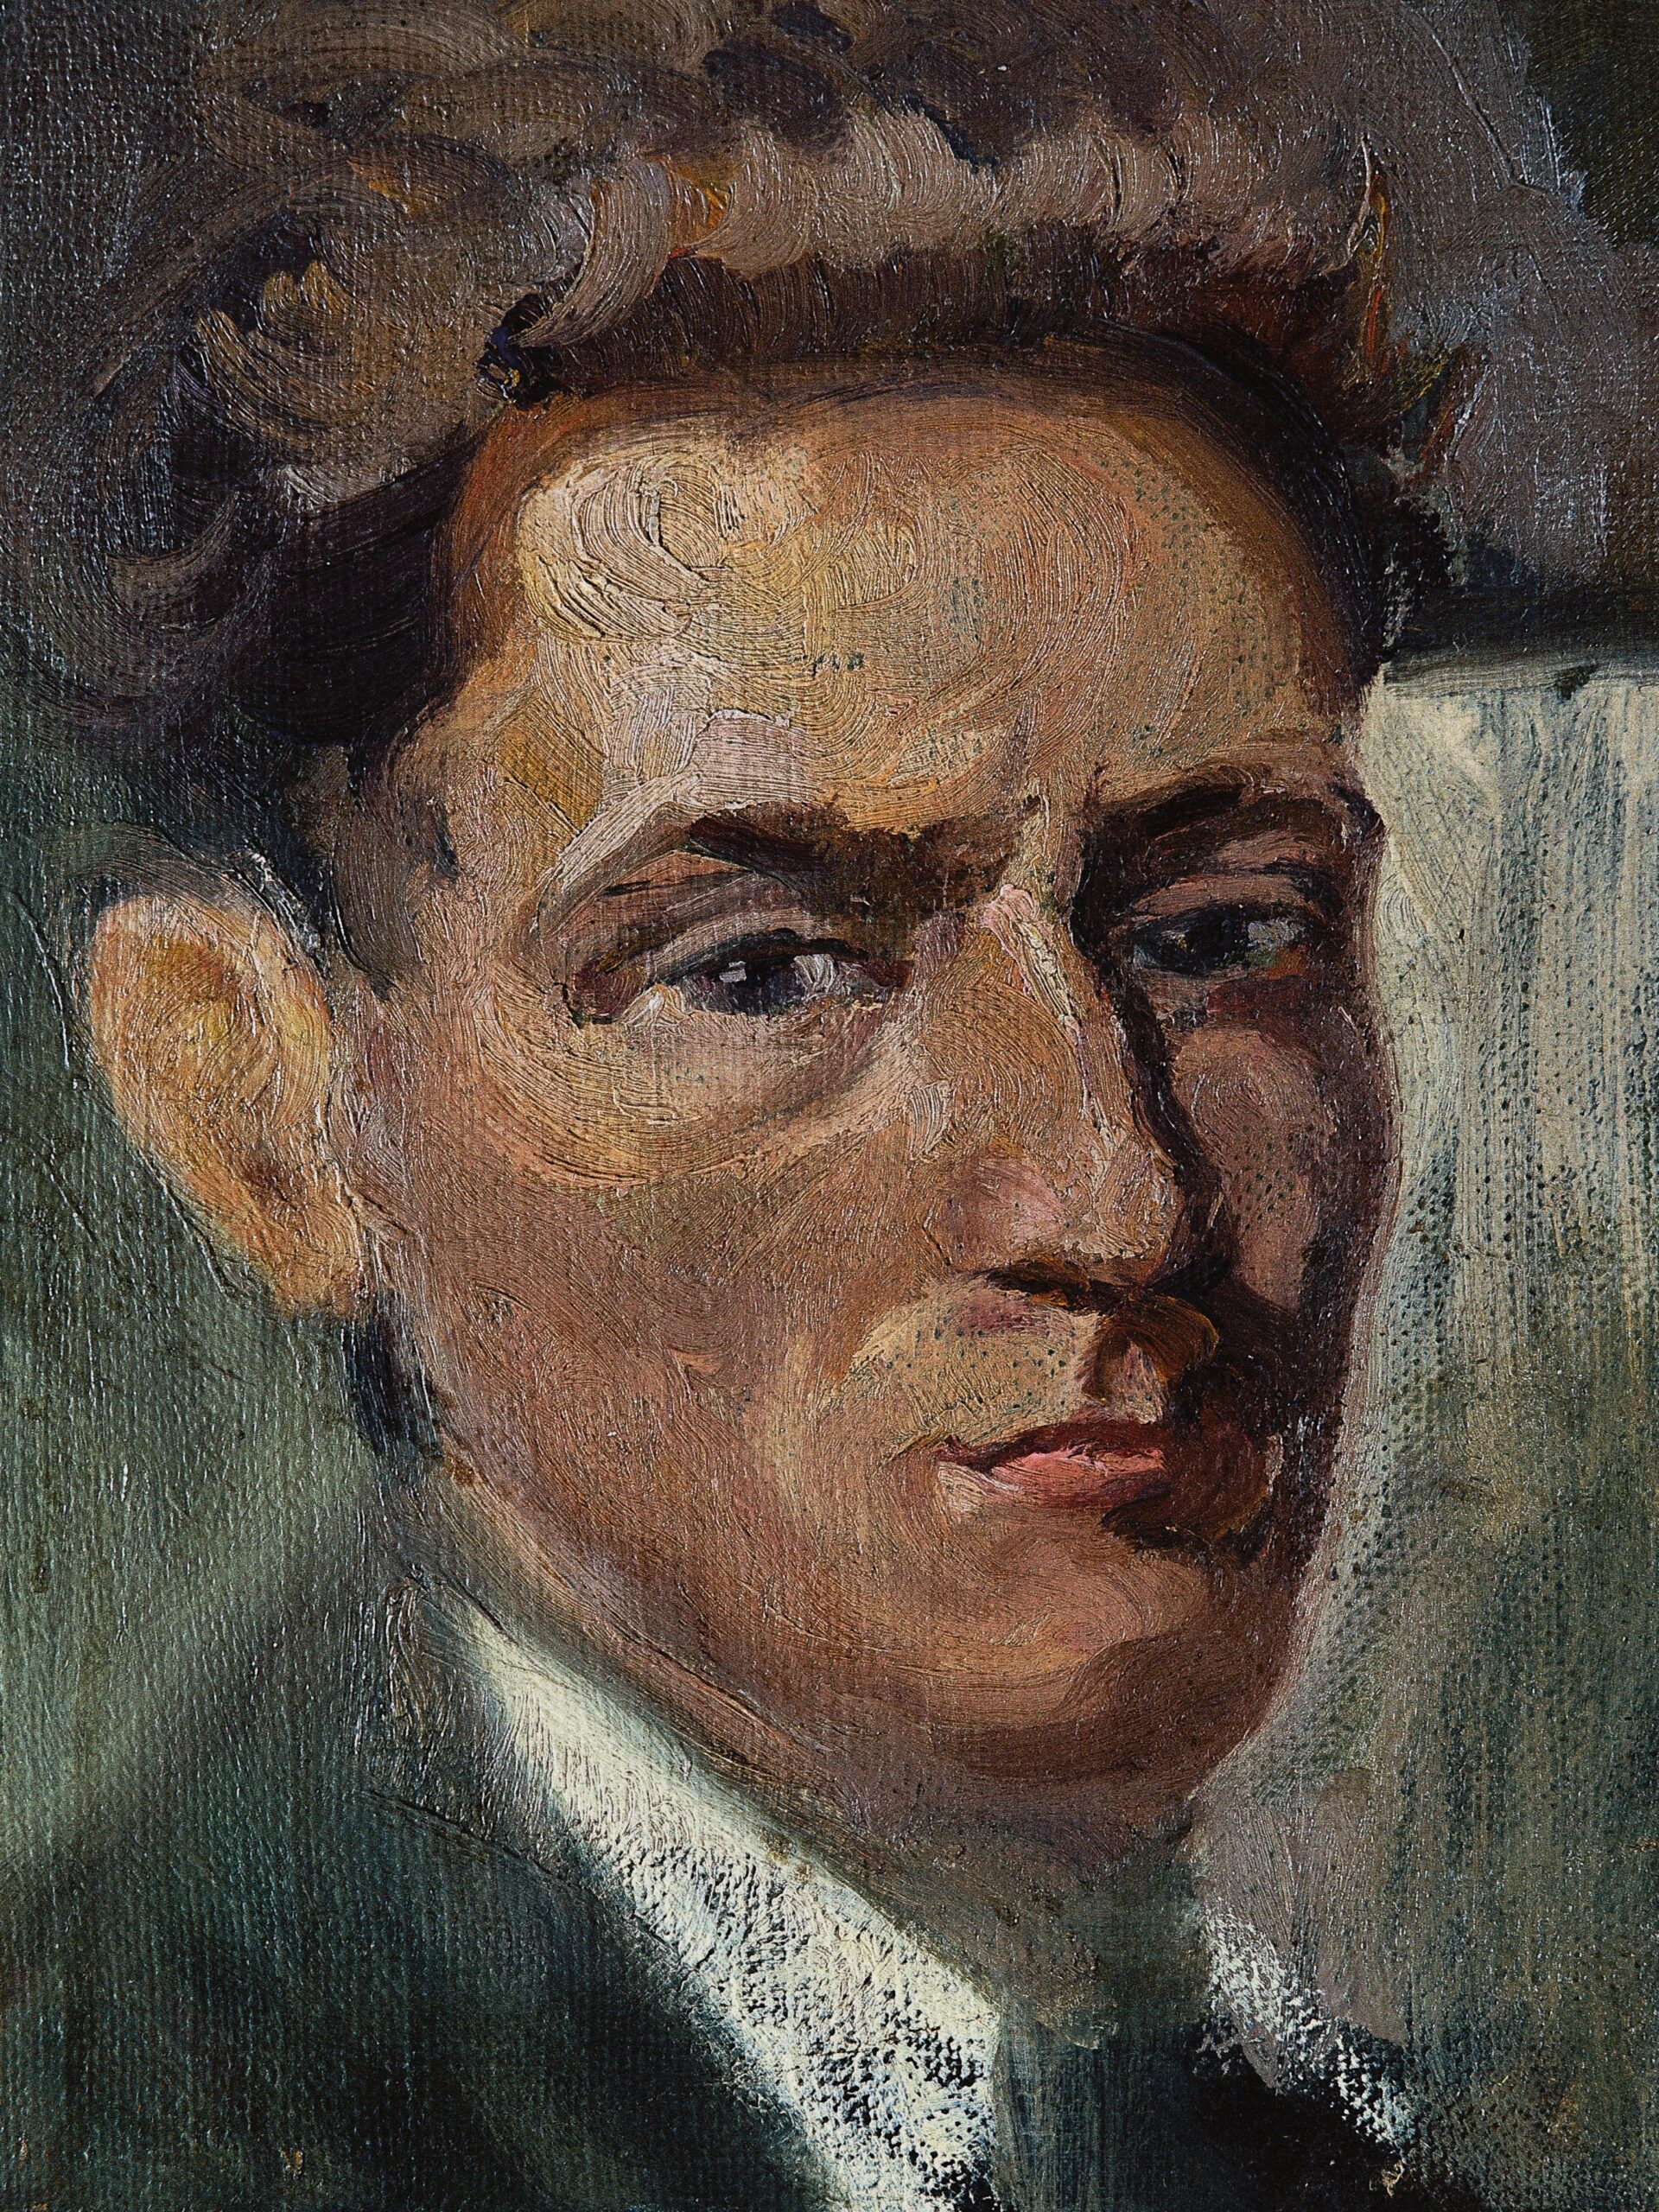 Pintura de José Manaut titulada Autorretrato, 1959. Óleo sobre lienzo.